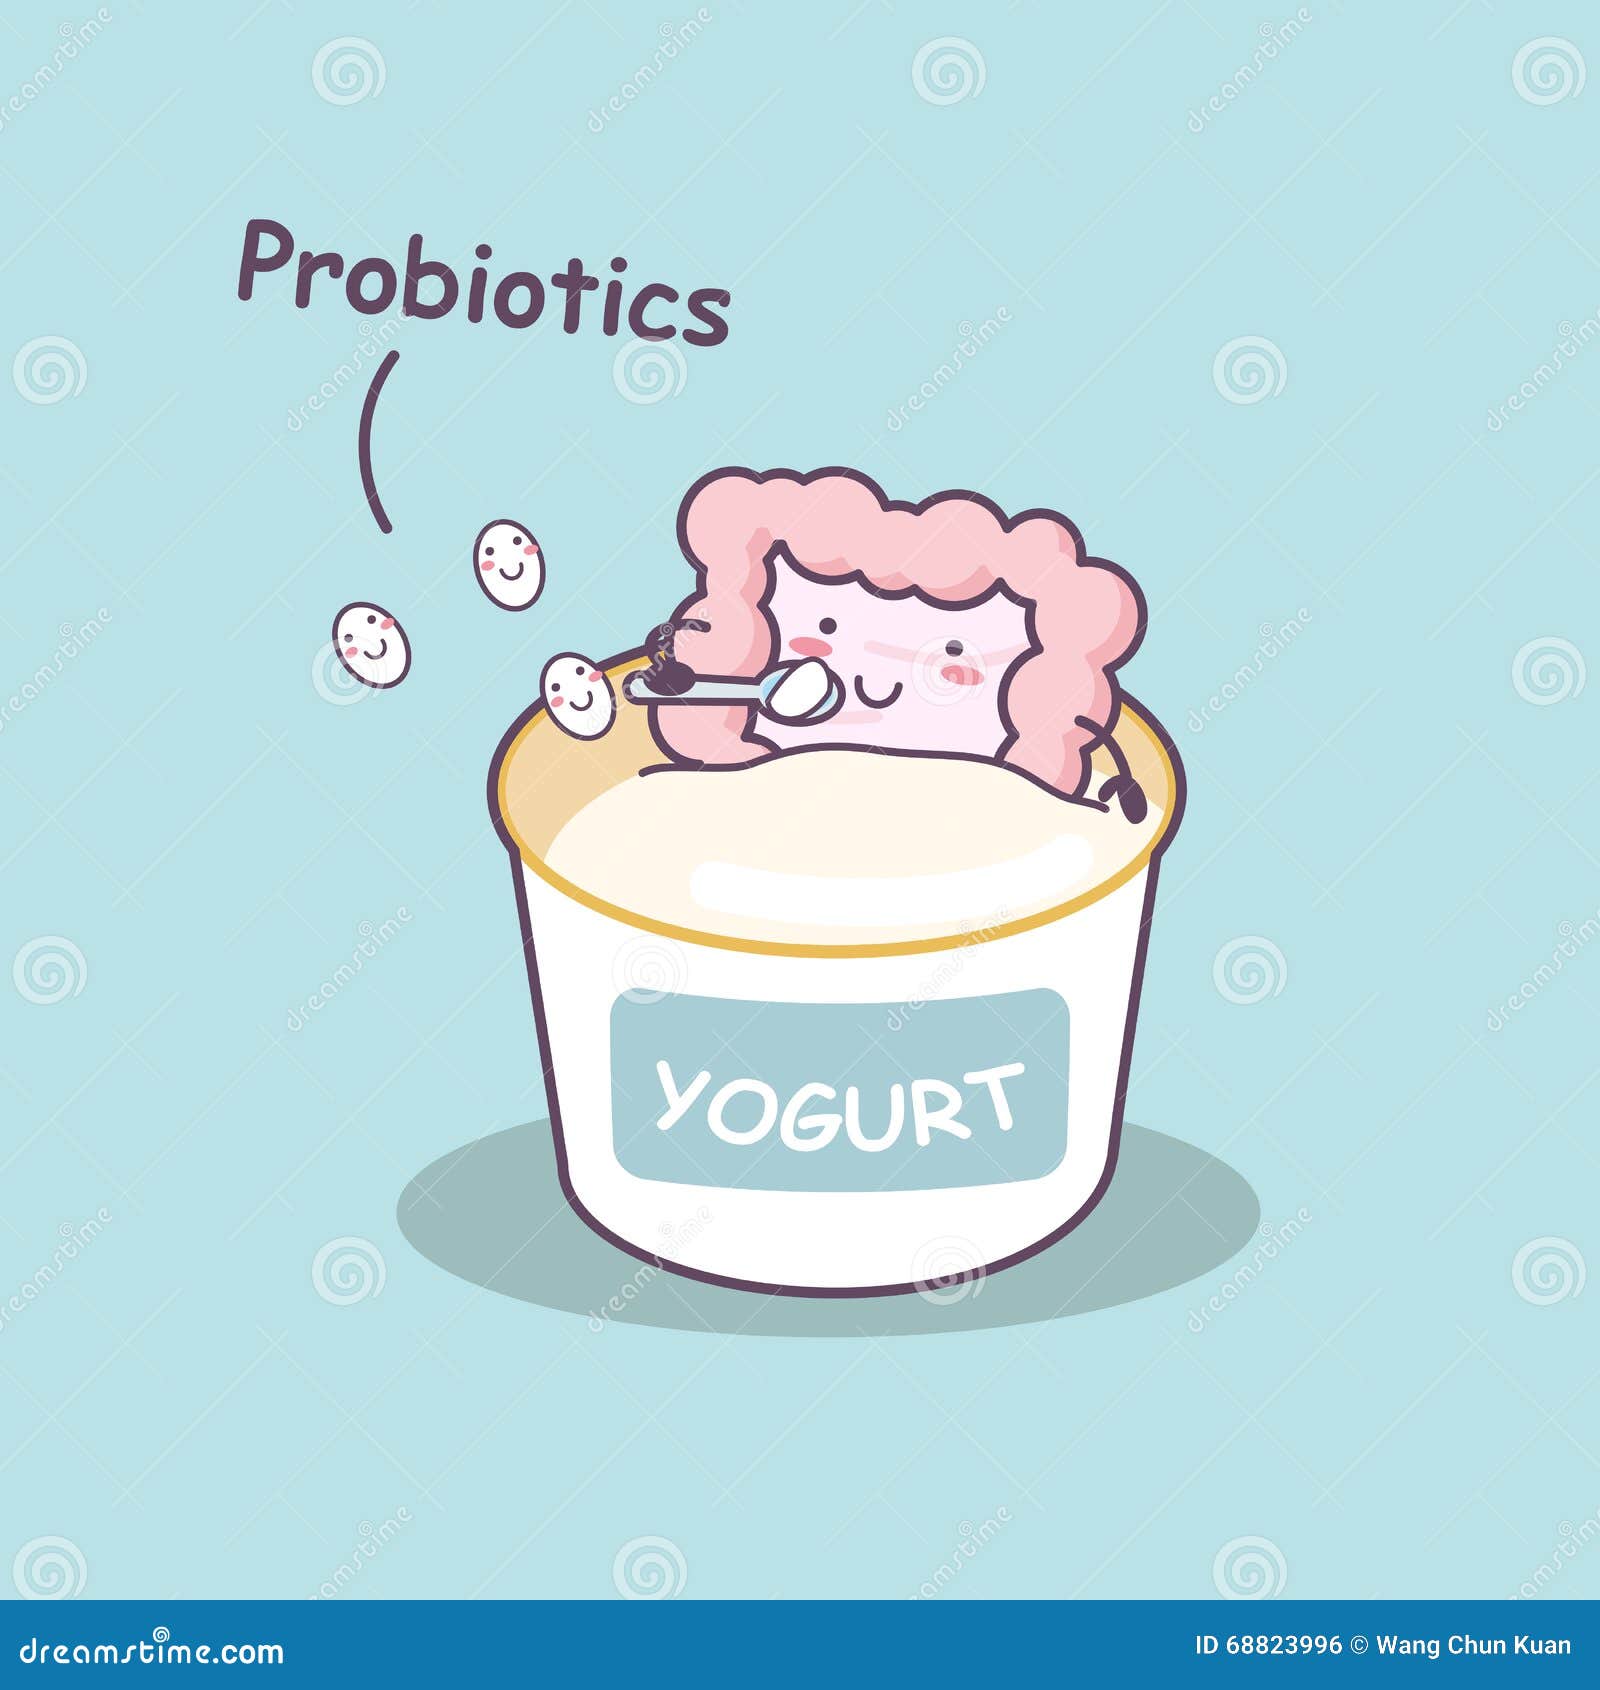 Intestine Eating Yogurt With Probiotics Stock Vector ...